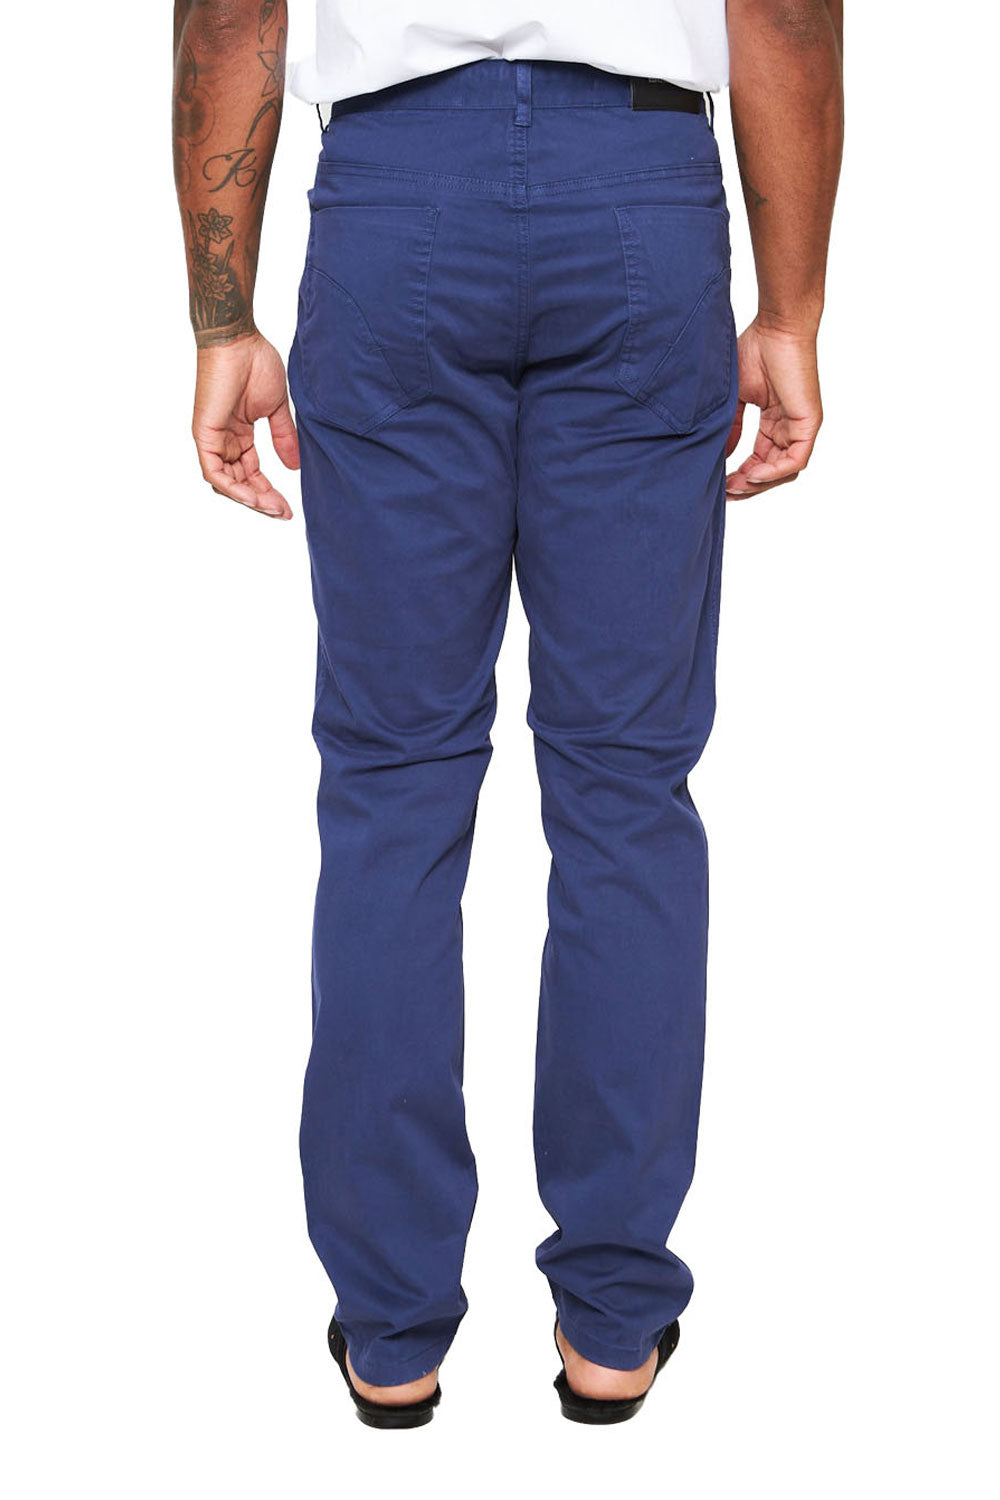 Barabas Men's Solid Color Front button fasten Slim Denim  Jeans B2077